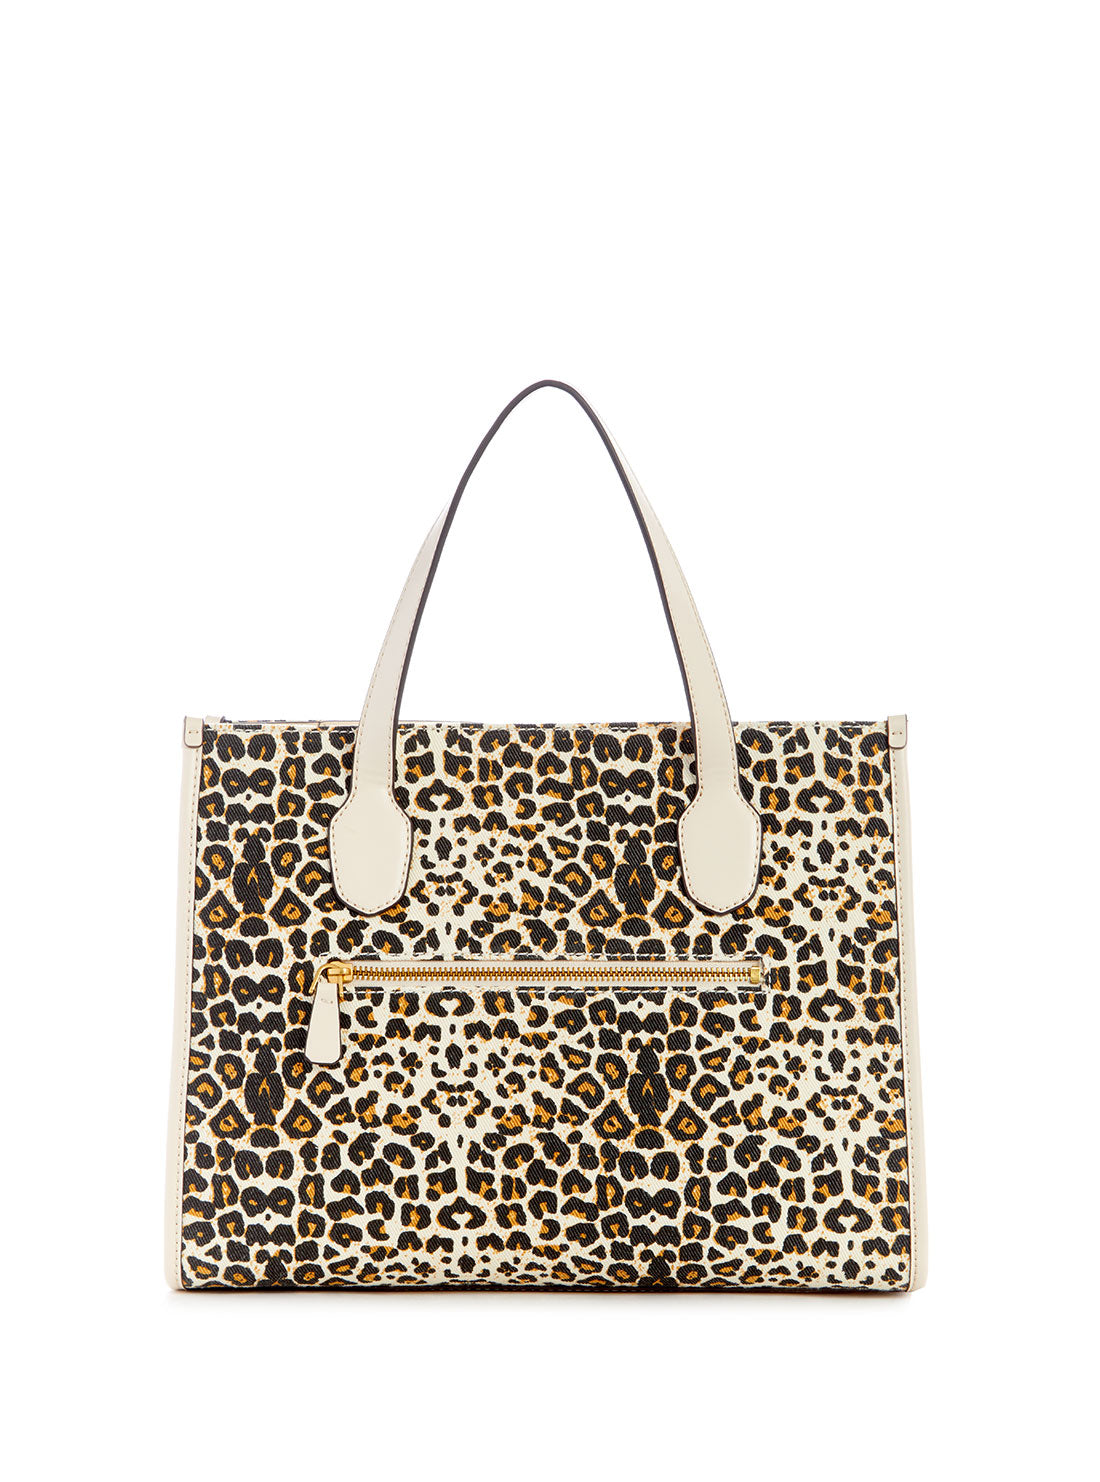 GUESS Women's Leopard Izzy Tote Bag LA865422 Back View